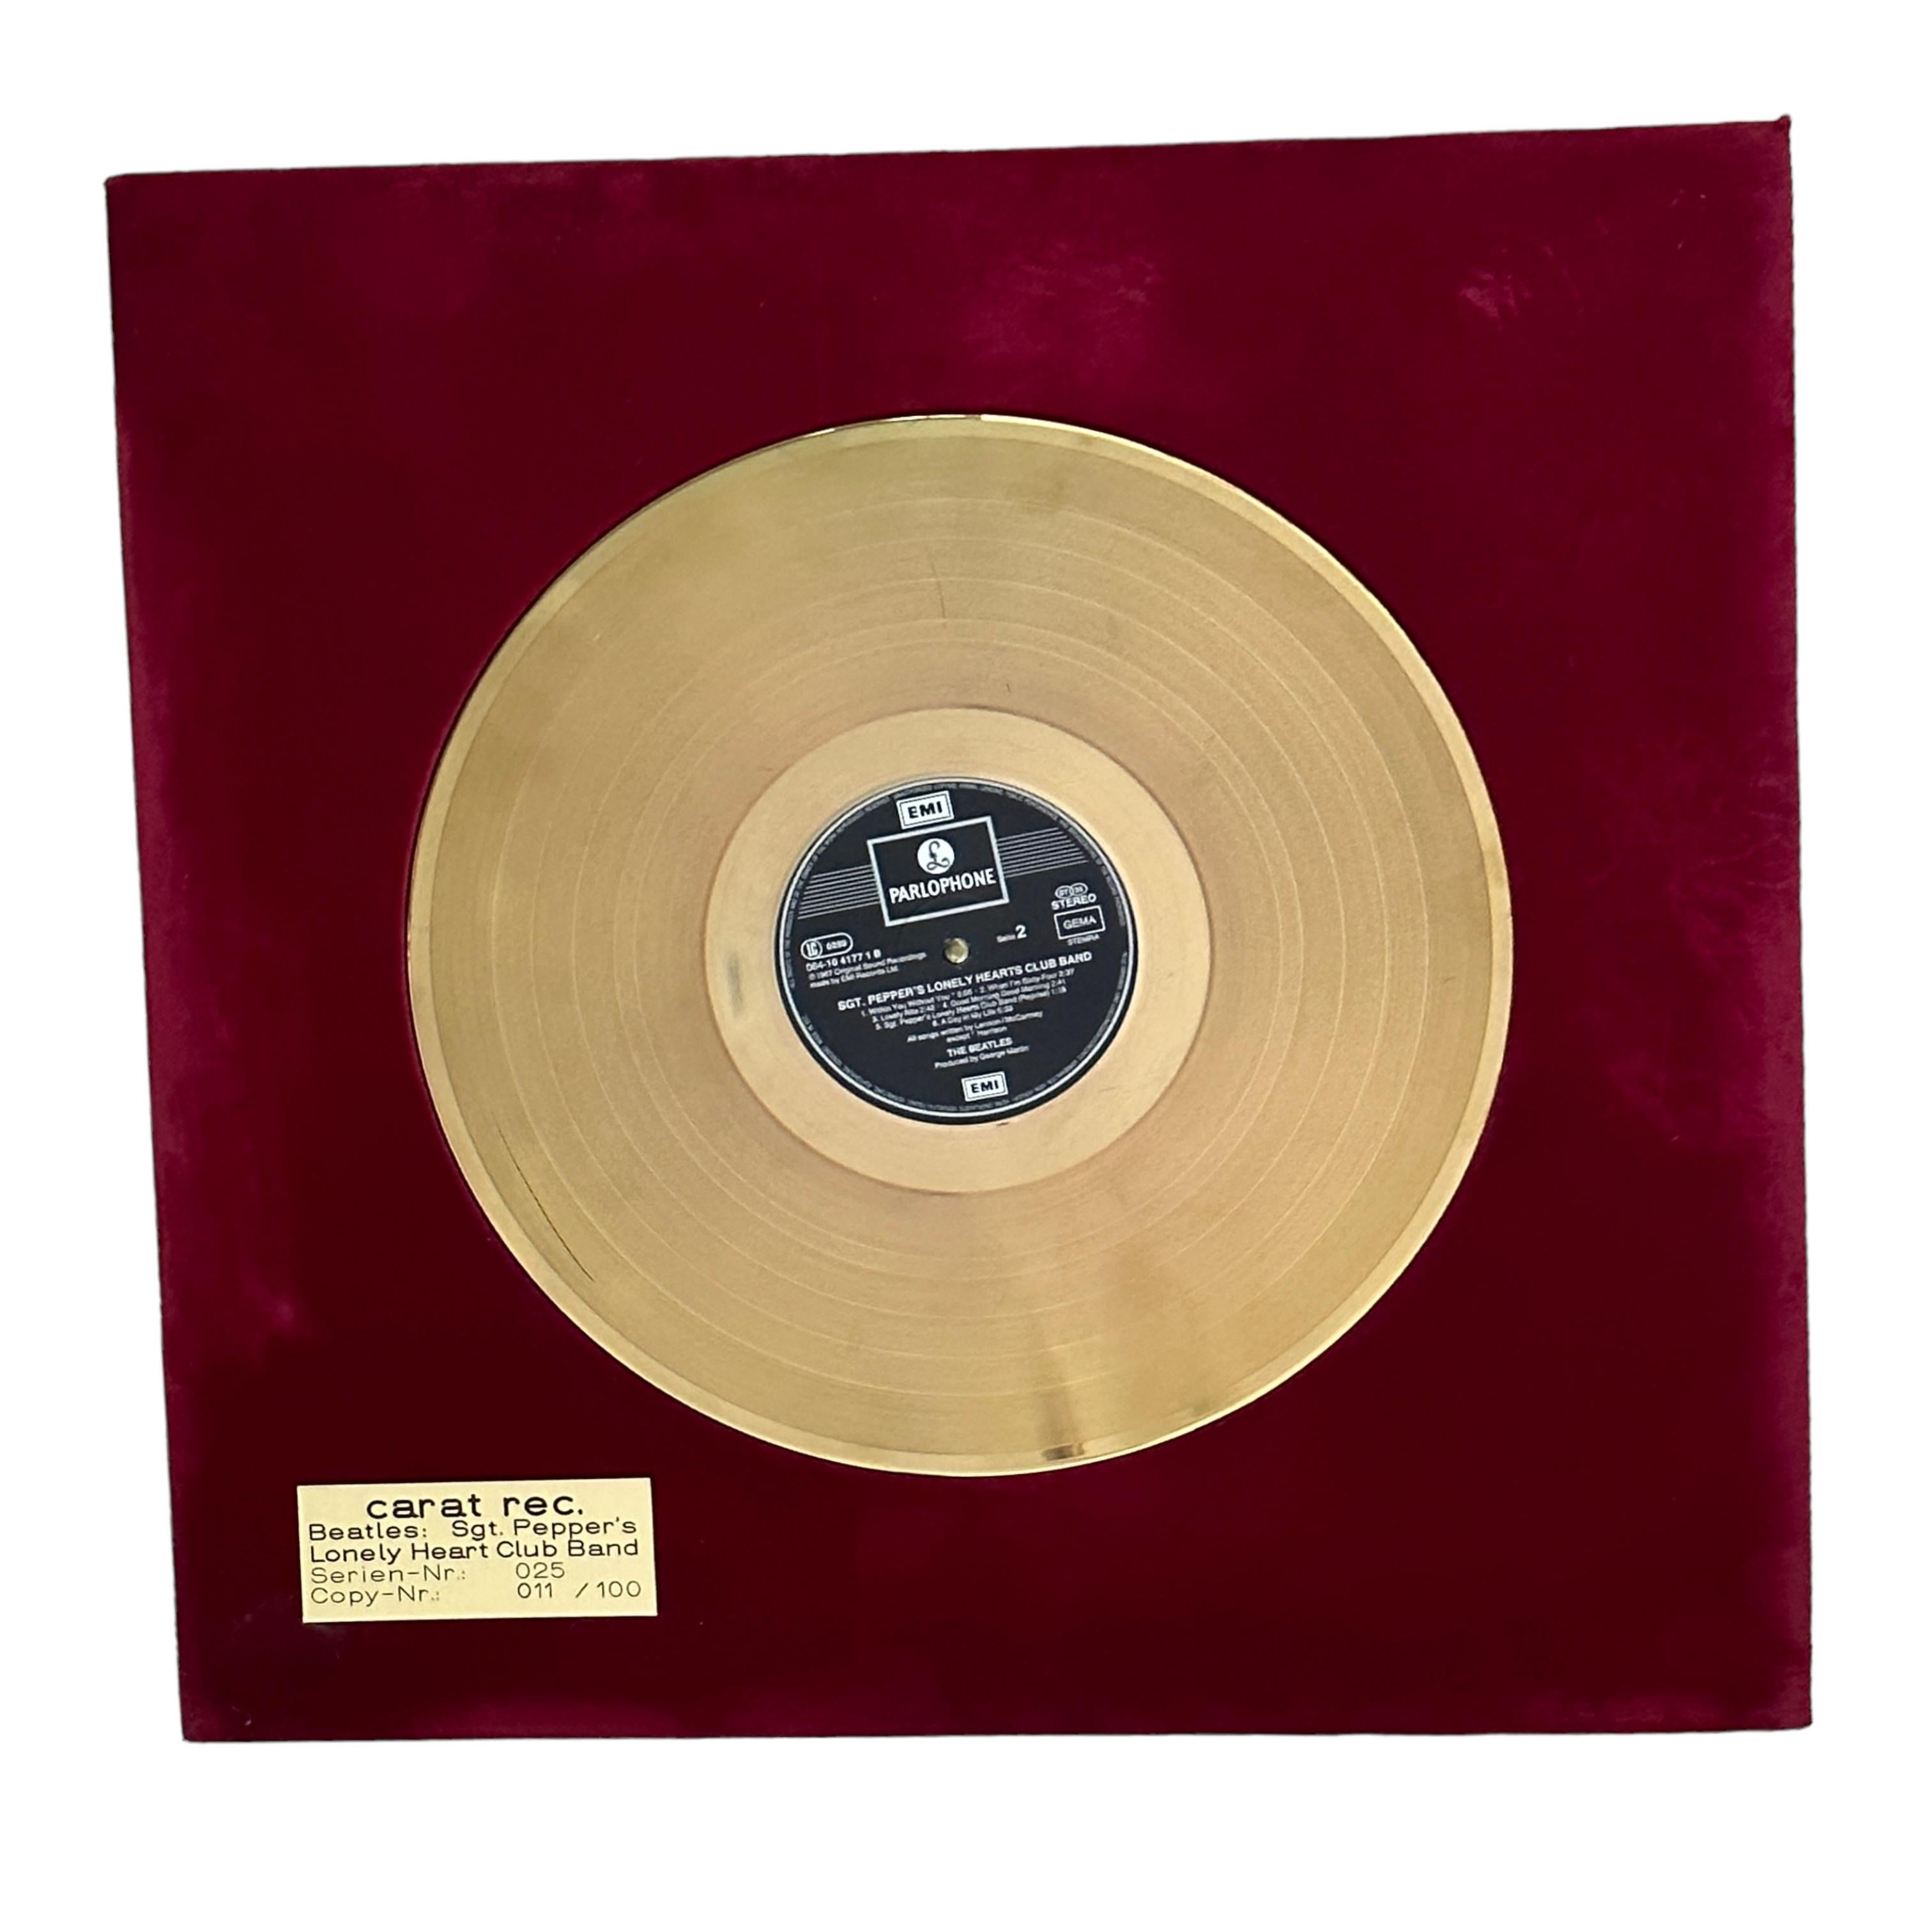 The Beatles Sgt. Peppers Lonely Hearts Club Band Goldene Platin Karat Rec 011/100 im Angebot 9